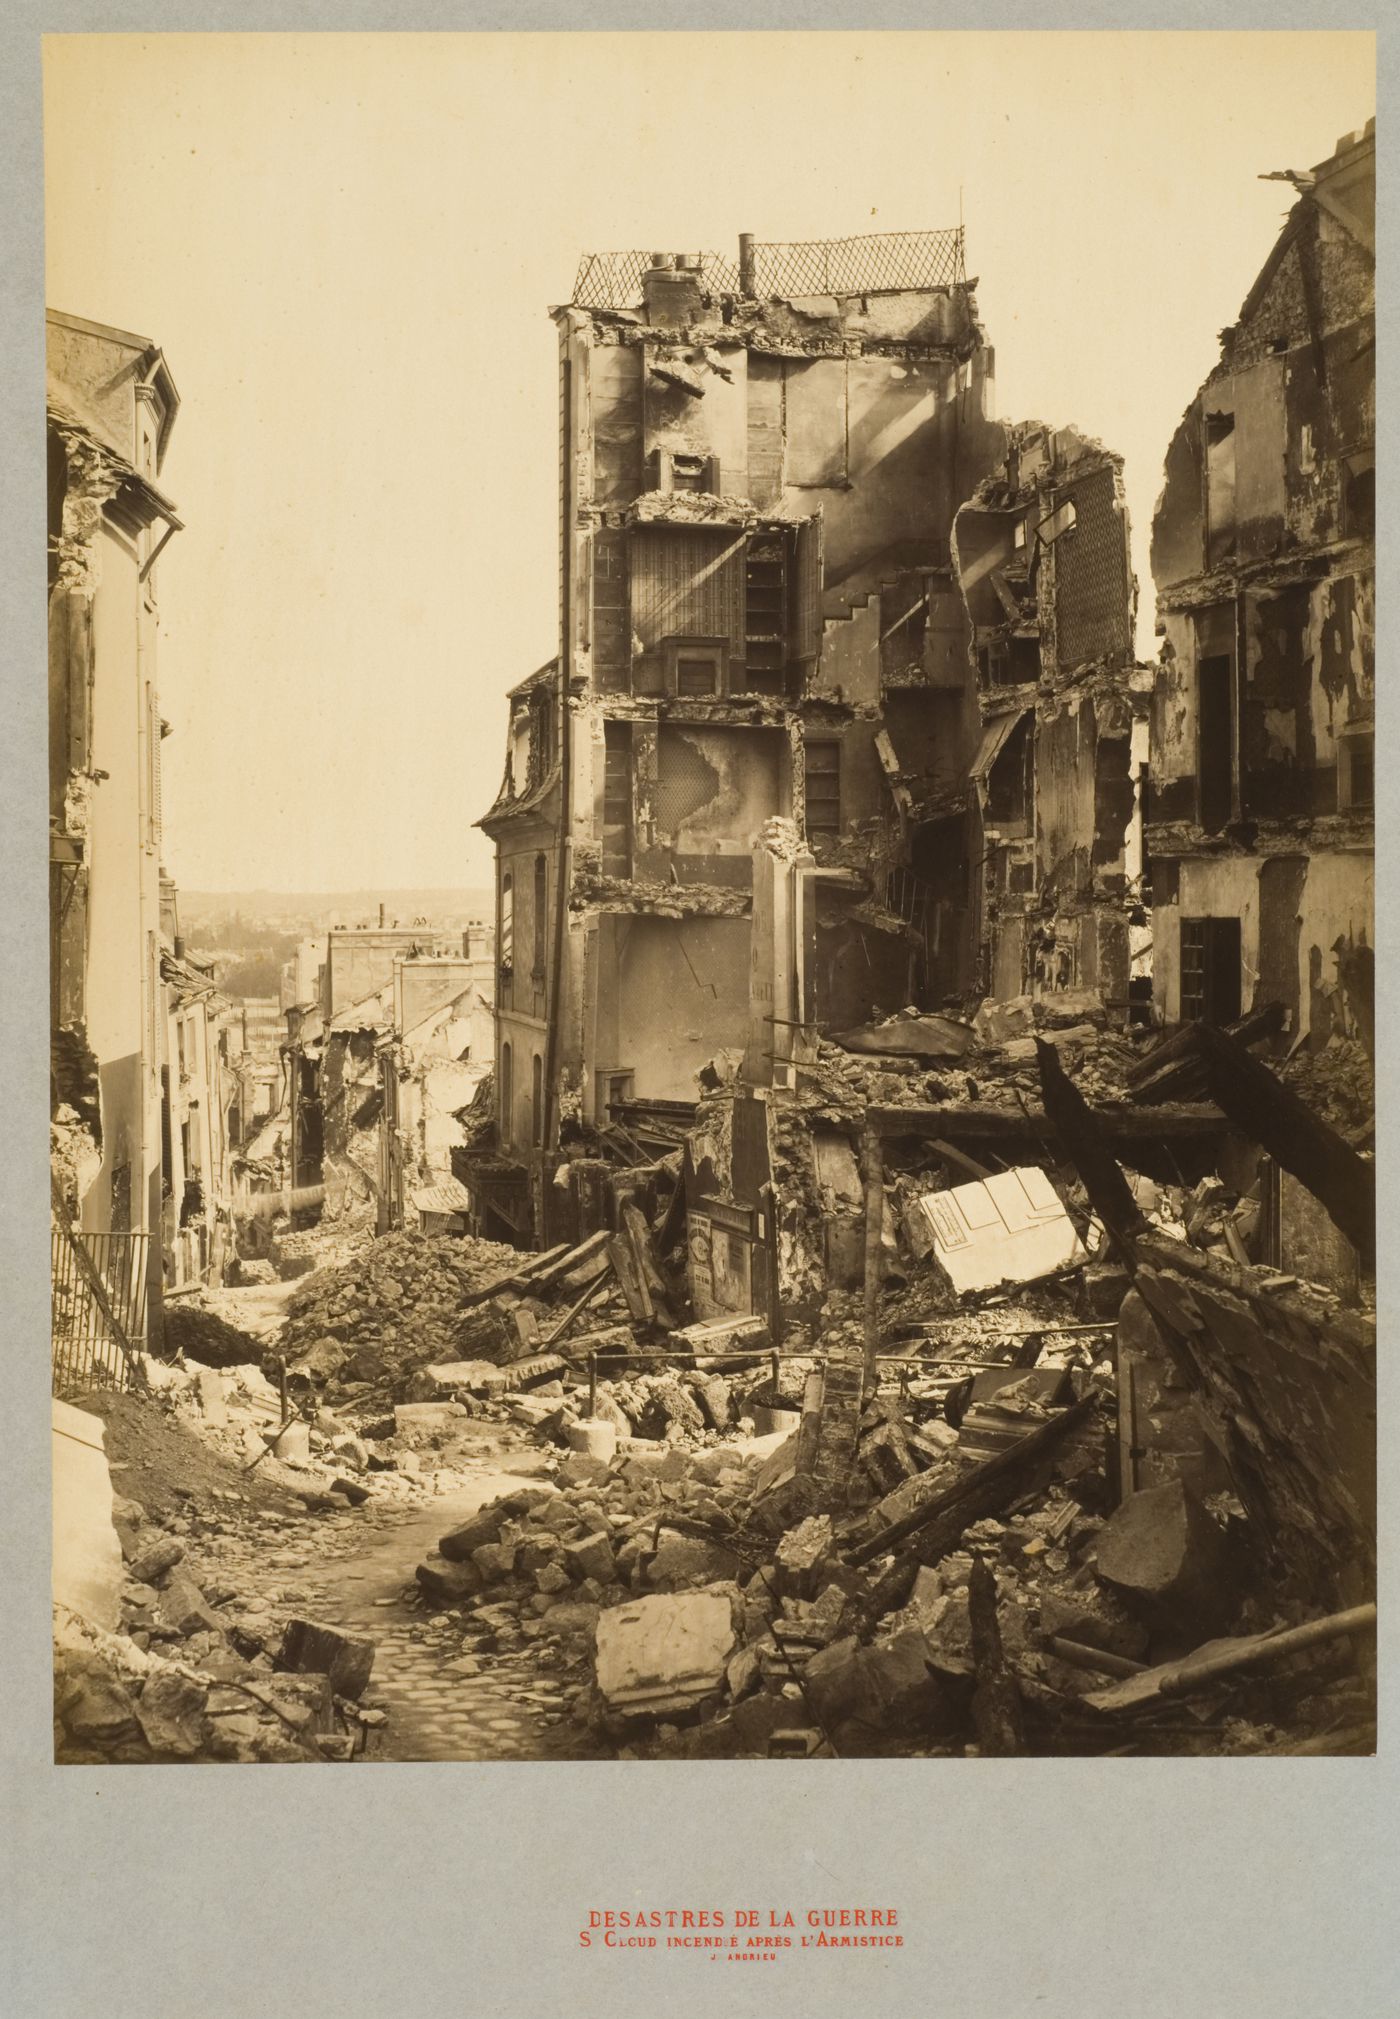 View of the damage to the St. Cloud after the Paris Commune, Paris, France